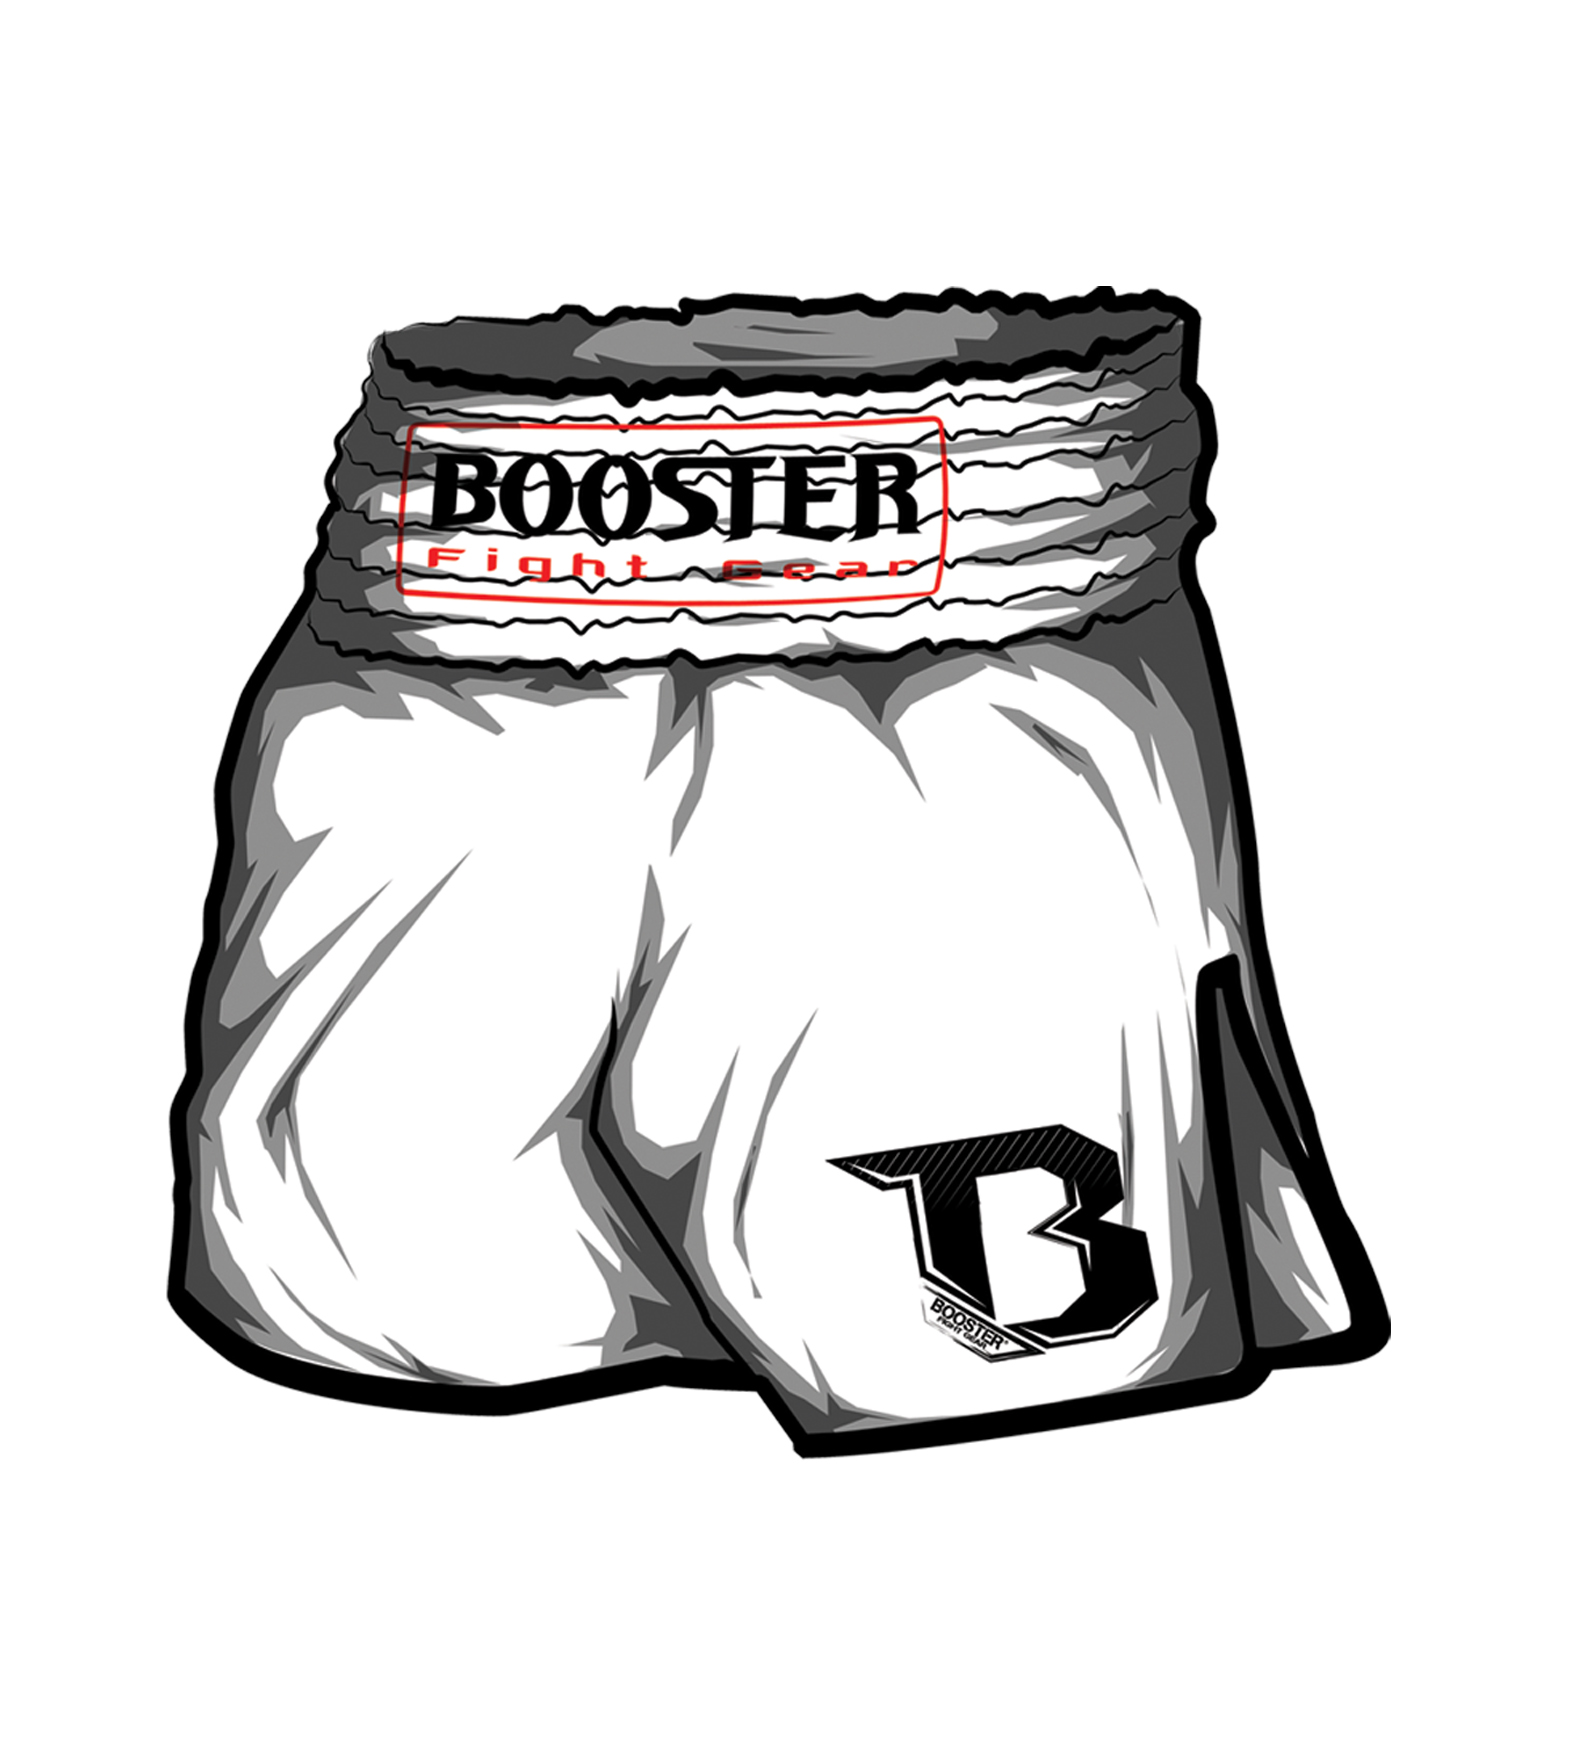 Booster  TBS trunks white - XL